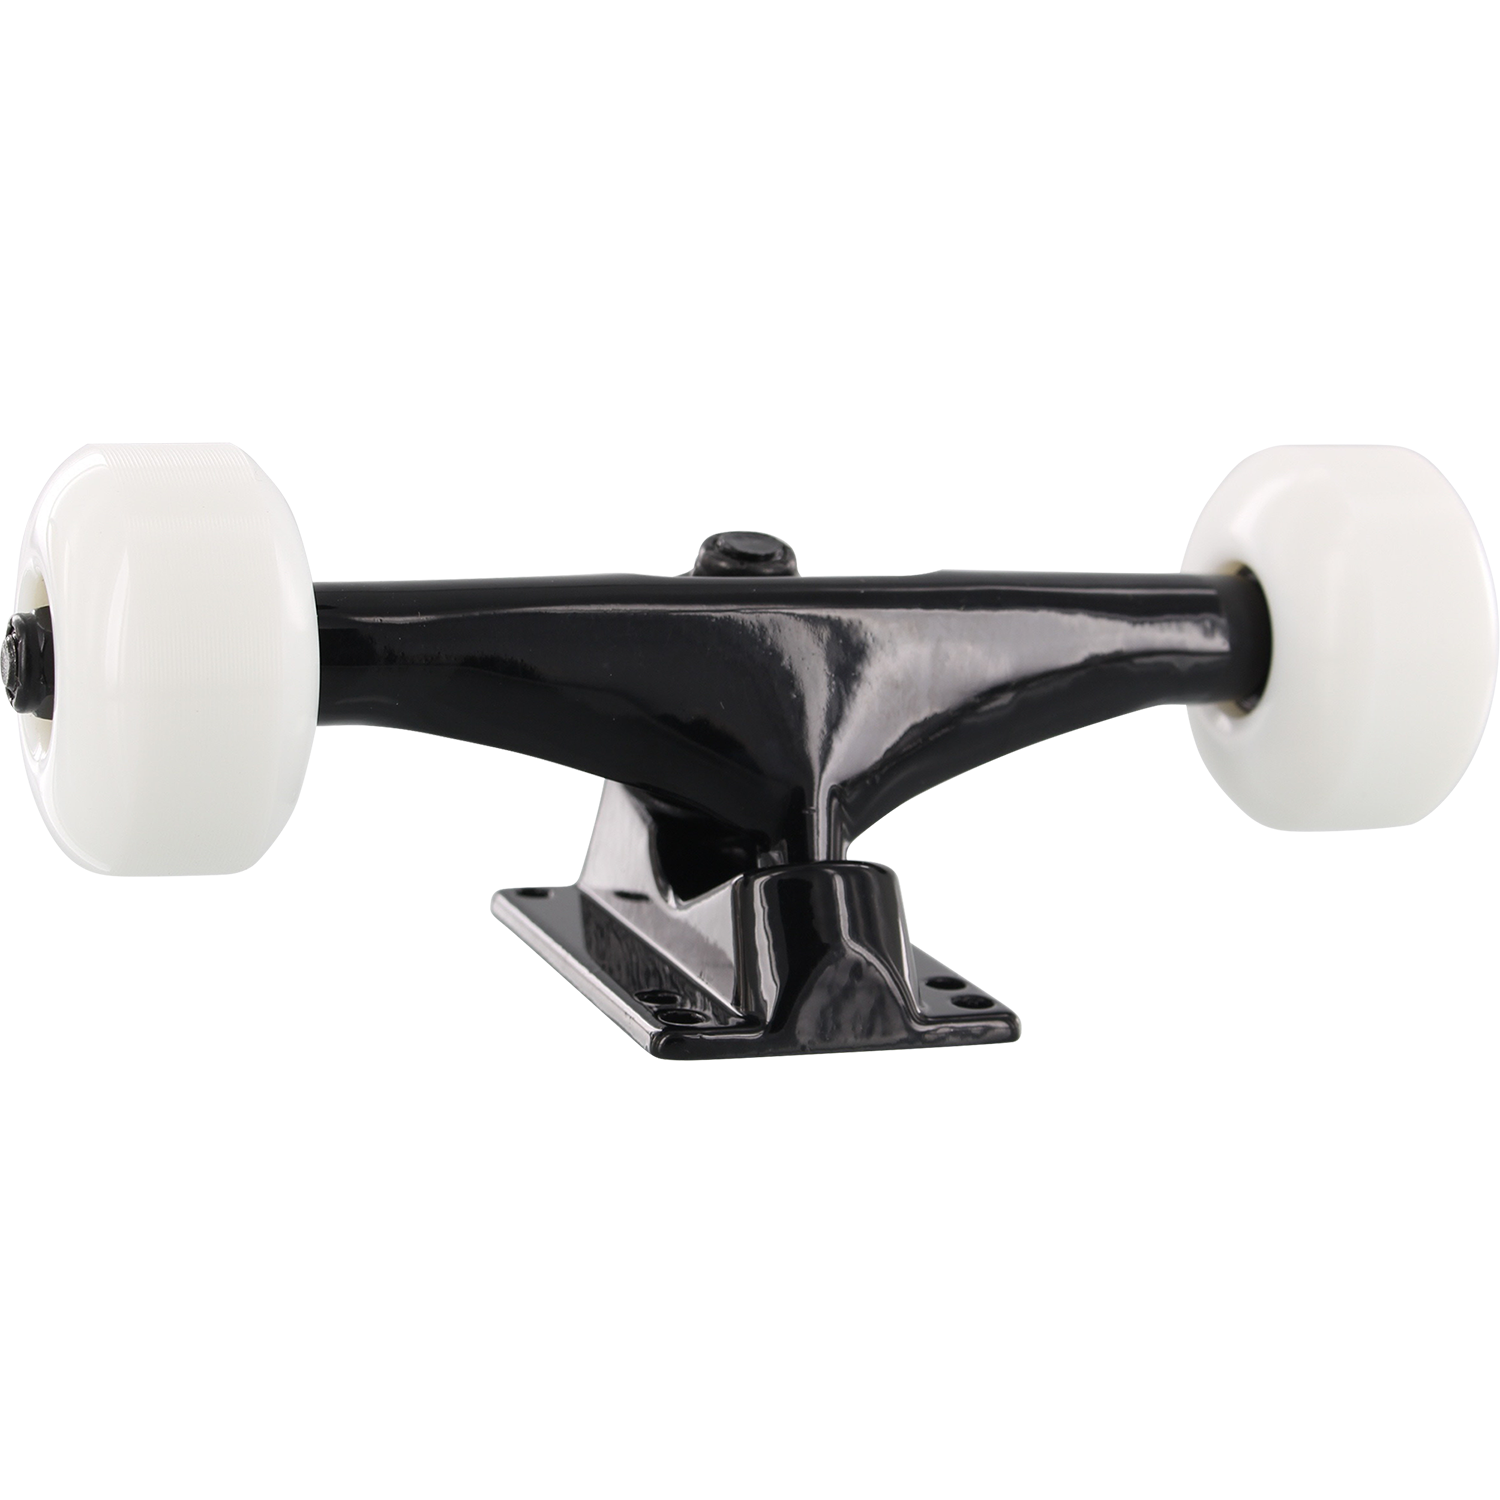 Essentials Assembly 5.5 Black W/White 54mm Skateboard Trucks (Set of 2)